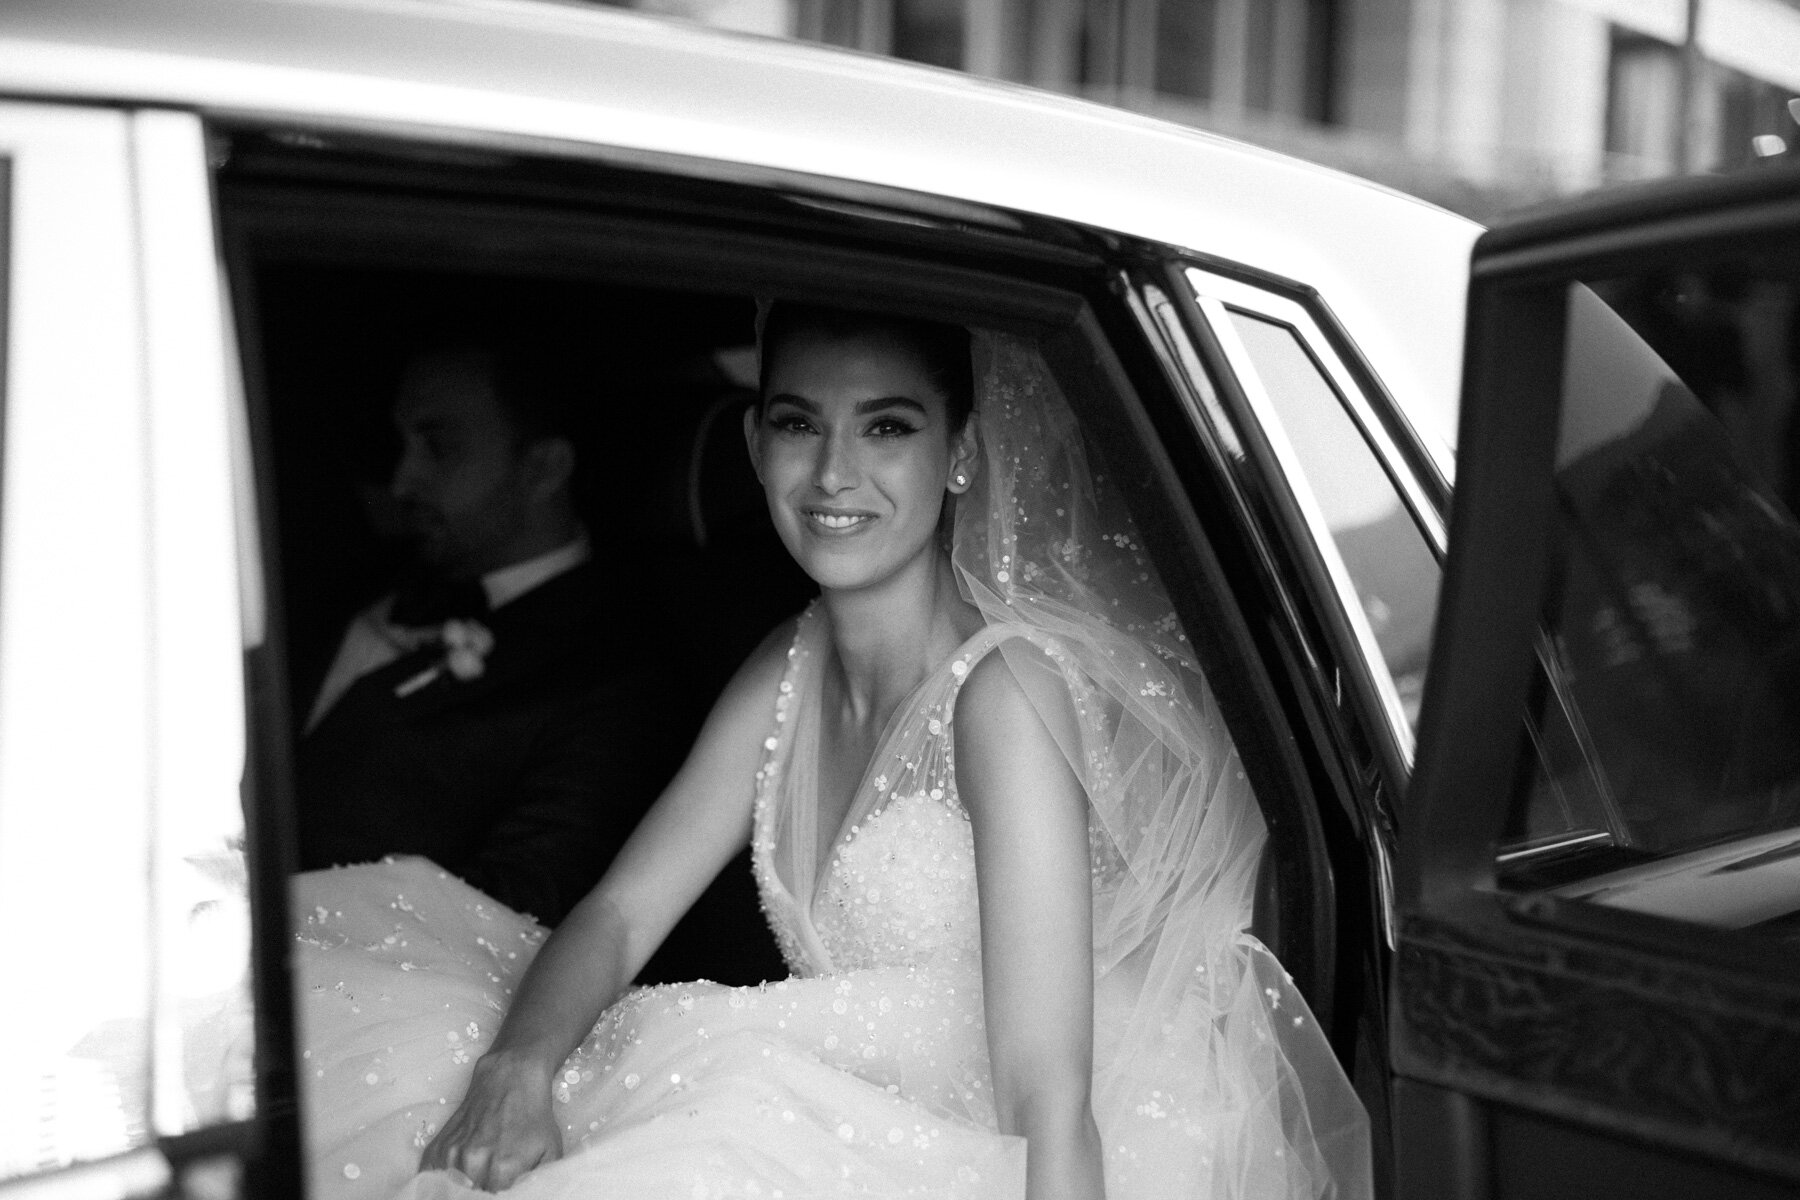 Monaco-Nice-Saint Tropez-Wedding-Elie-Saab-Katie-Grant-destination-wedding (55 of 112).jpg